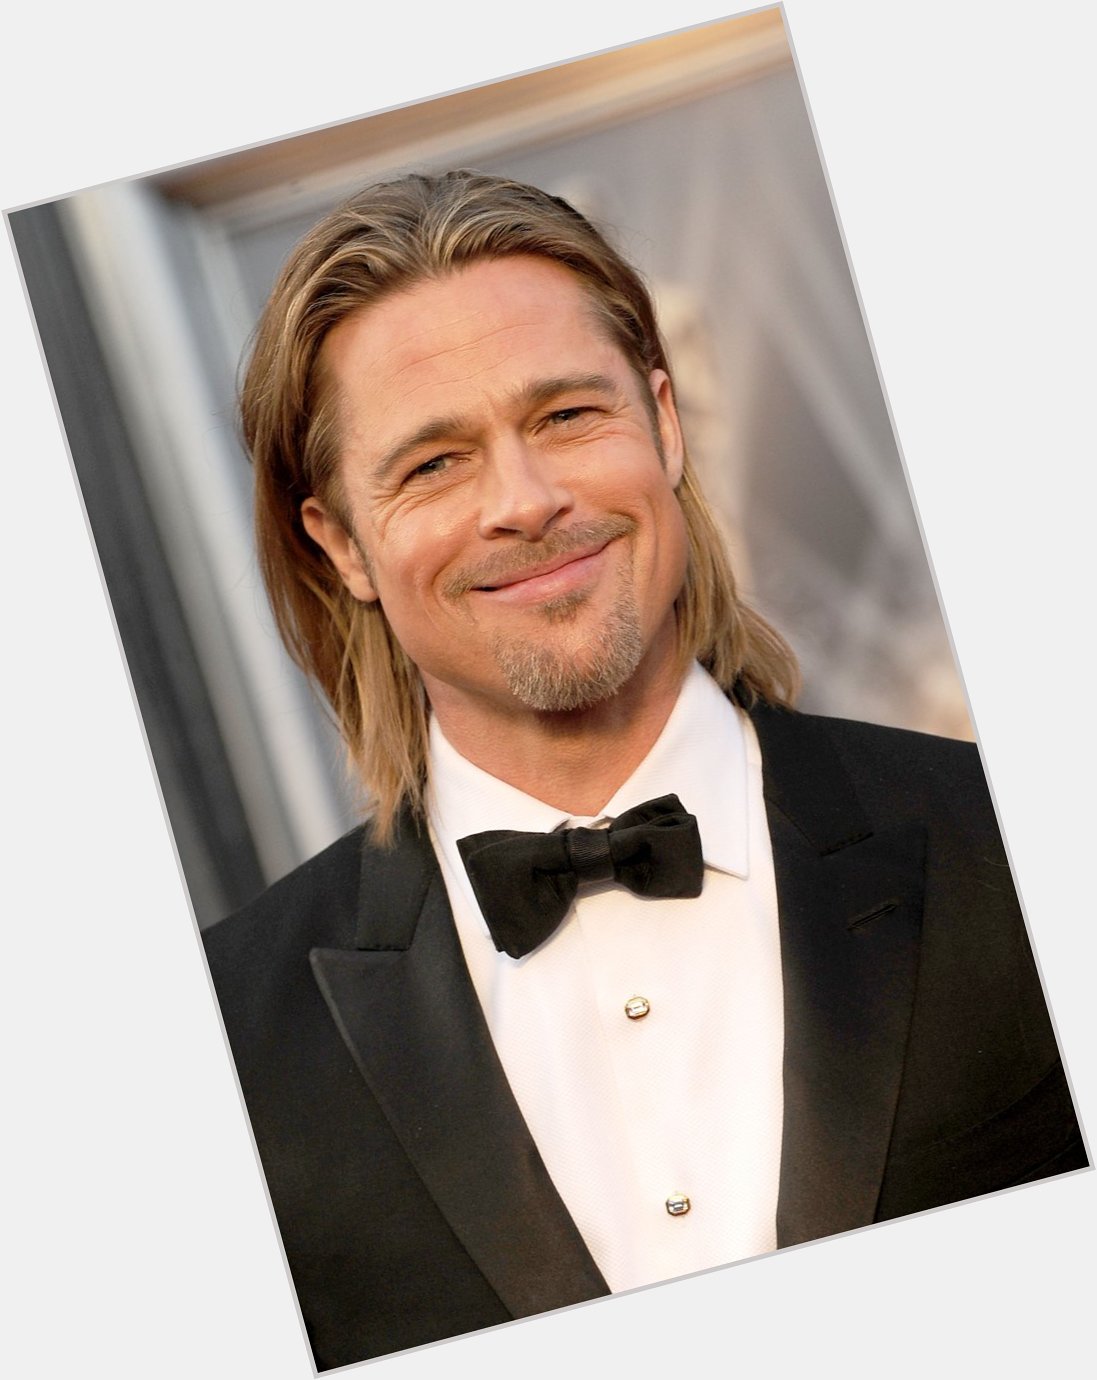 Happy 57th birthday to Brad Pitt! What\s your favorite movie starring Brad? 